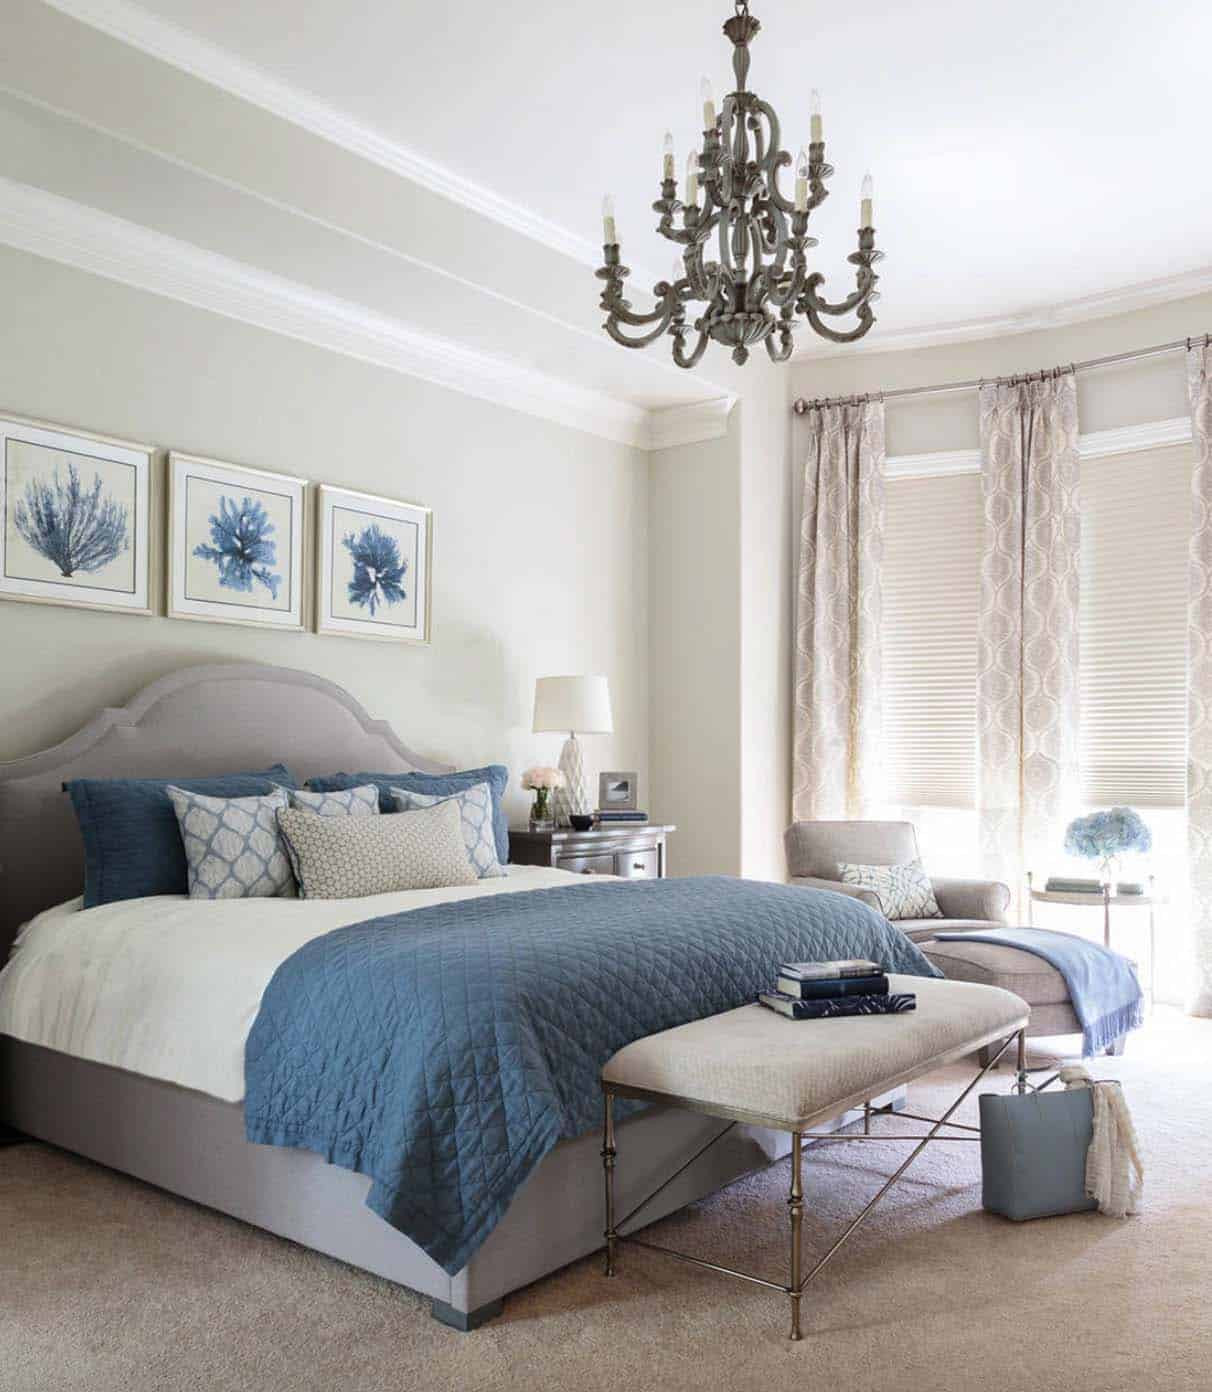 Master Bedroom Bedding
 20 Serene And Elegant Master Bedroom Decorating Ideas